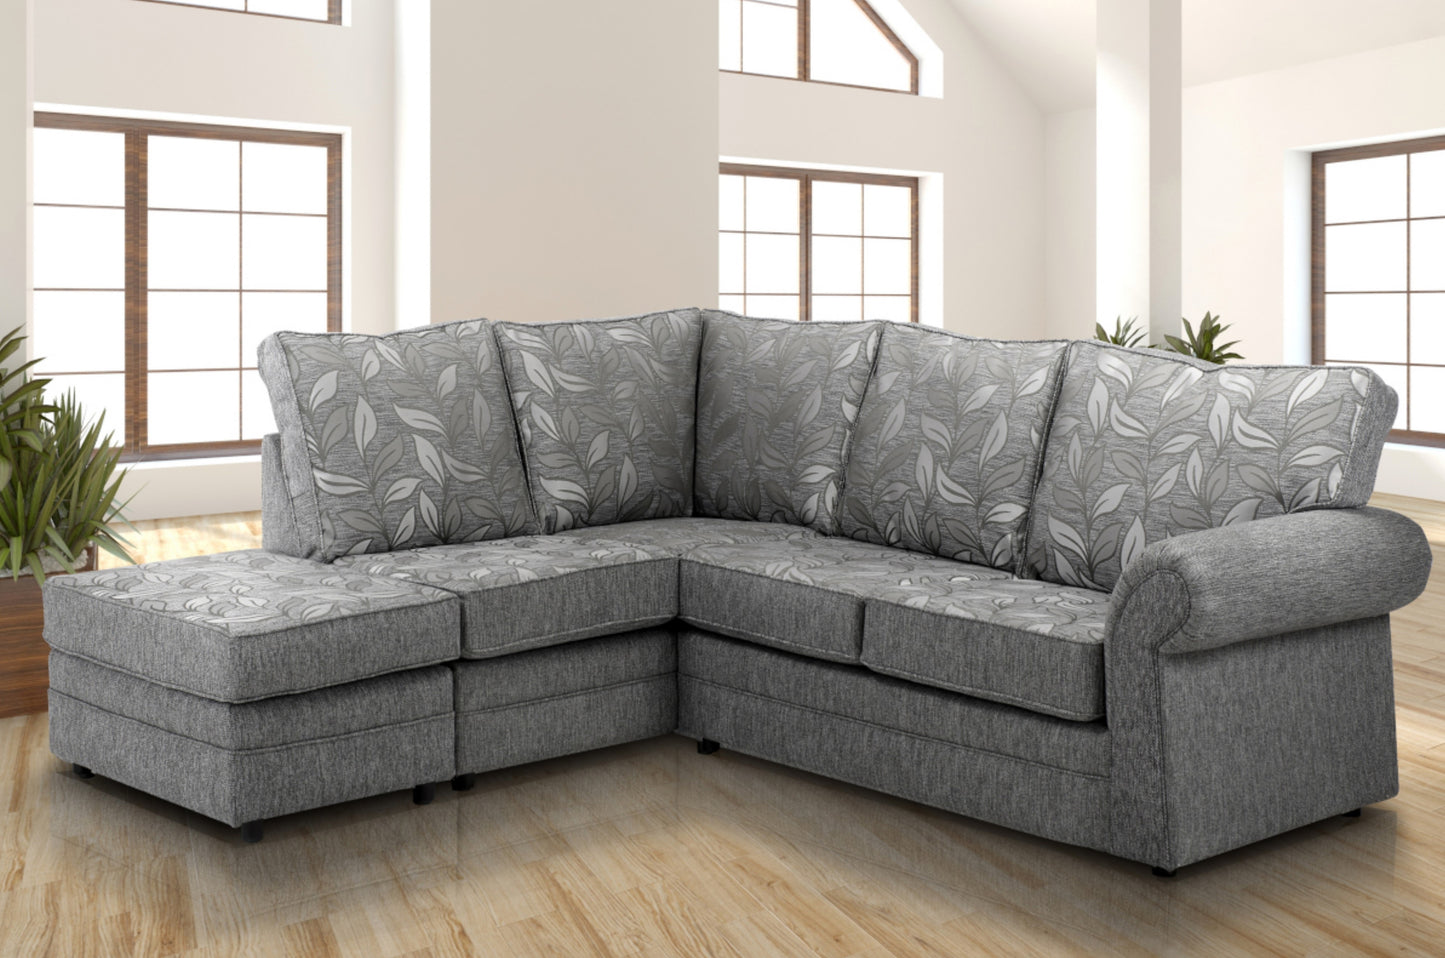 The Delilah Range - 2C1 Chaise Cornergroup Sofa | Custom Options Available